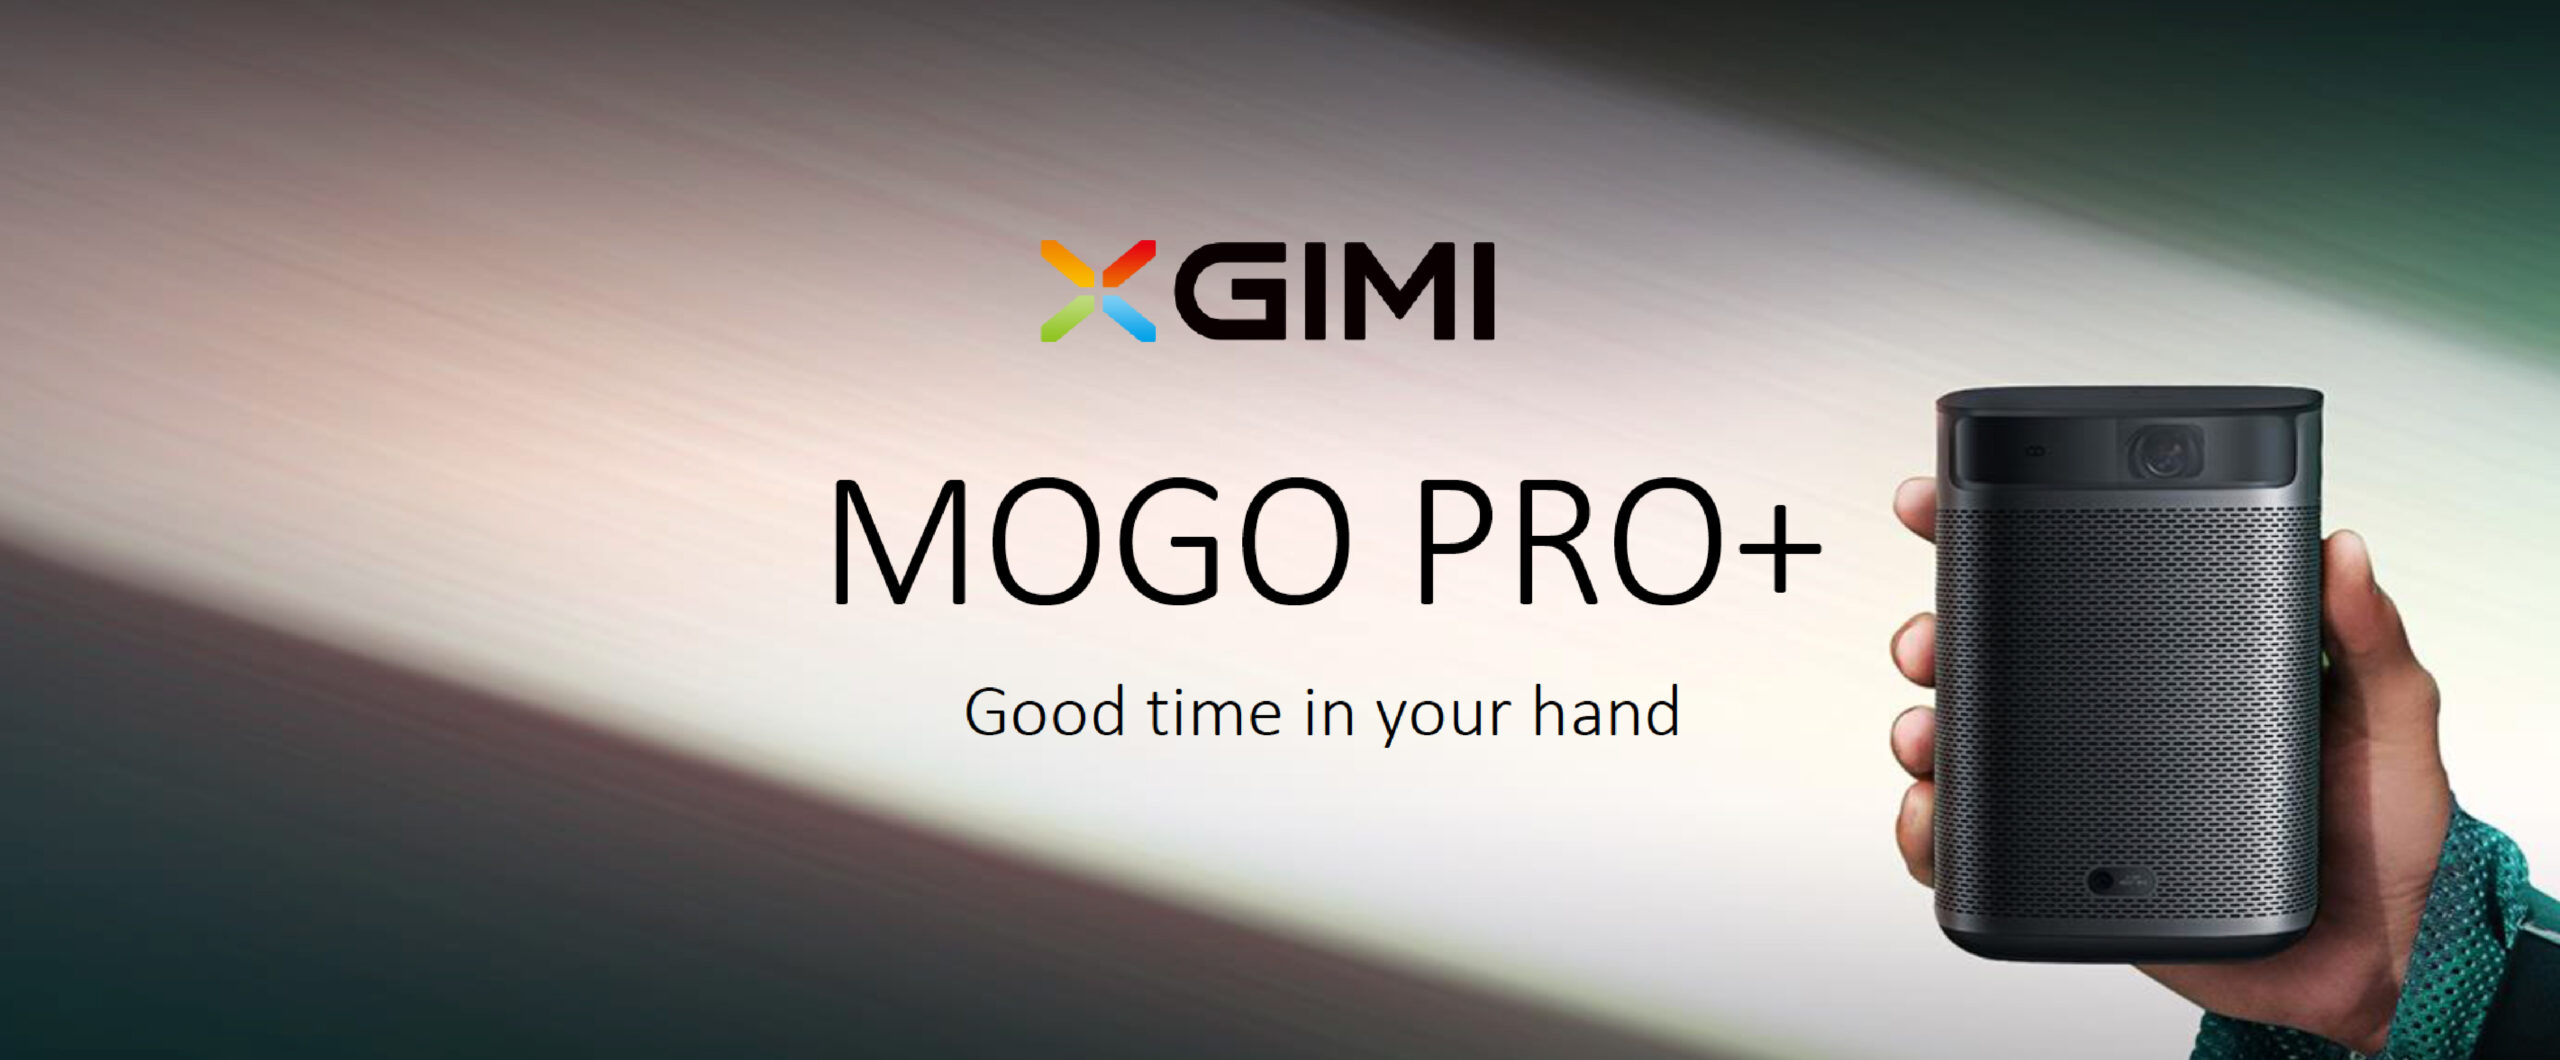 XGIMI Mogo Pro+